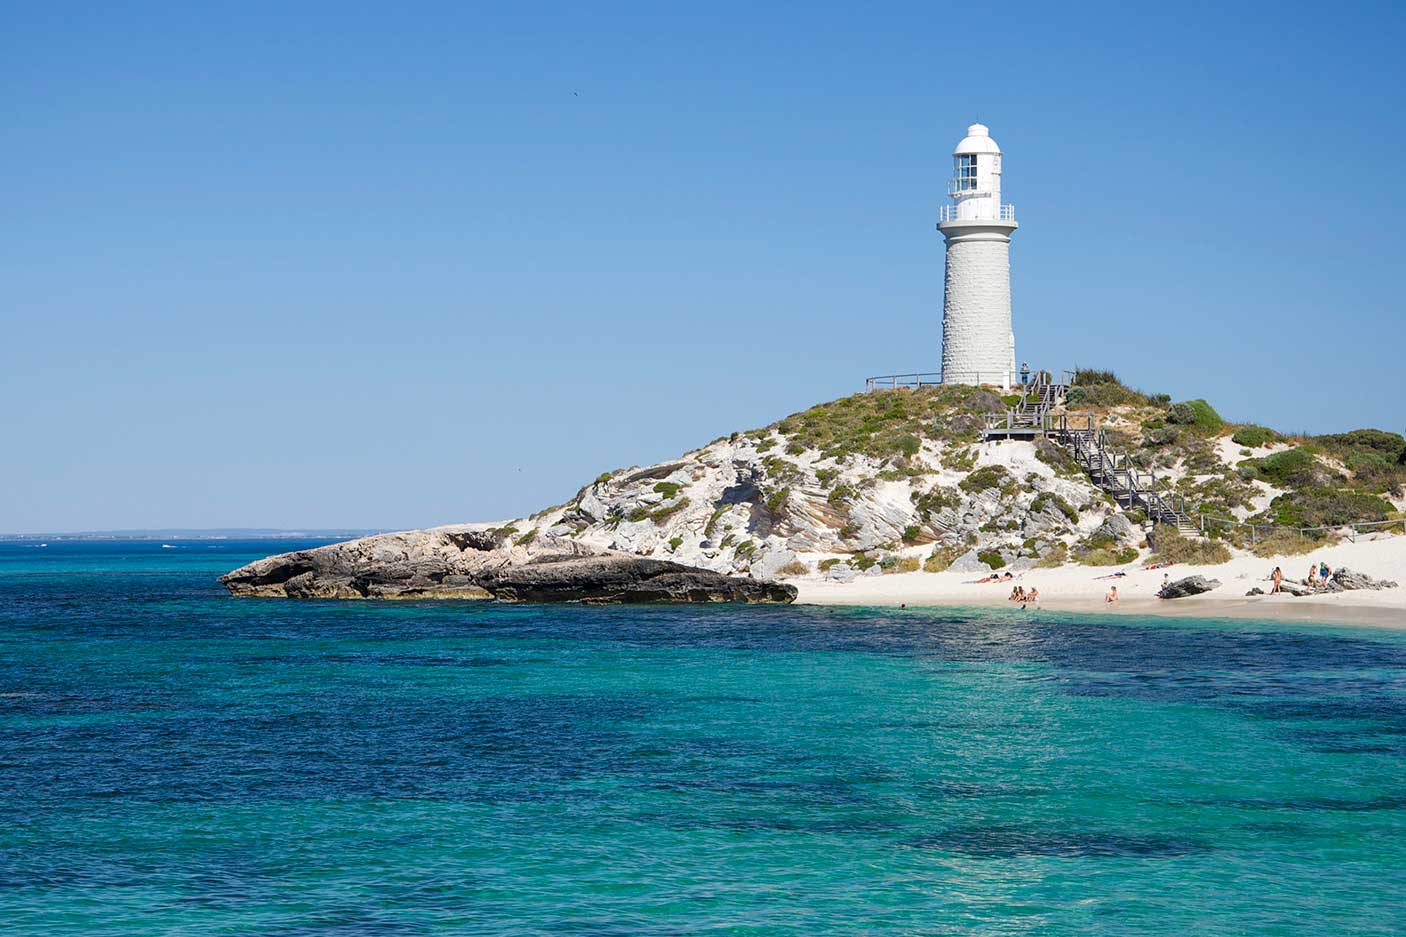 The lighthouse on Rottnest Island, Western Australia